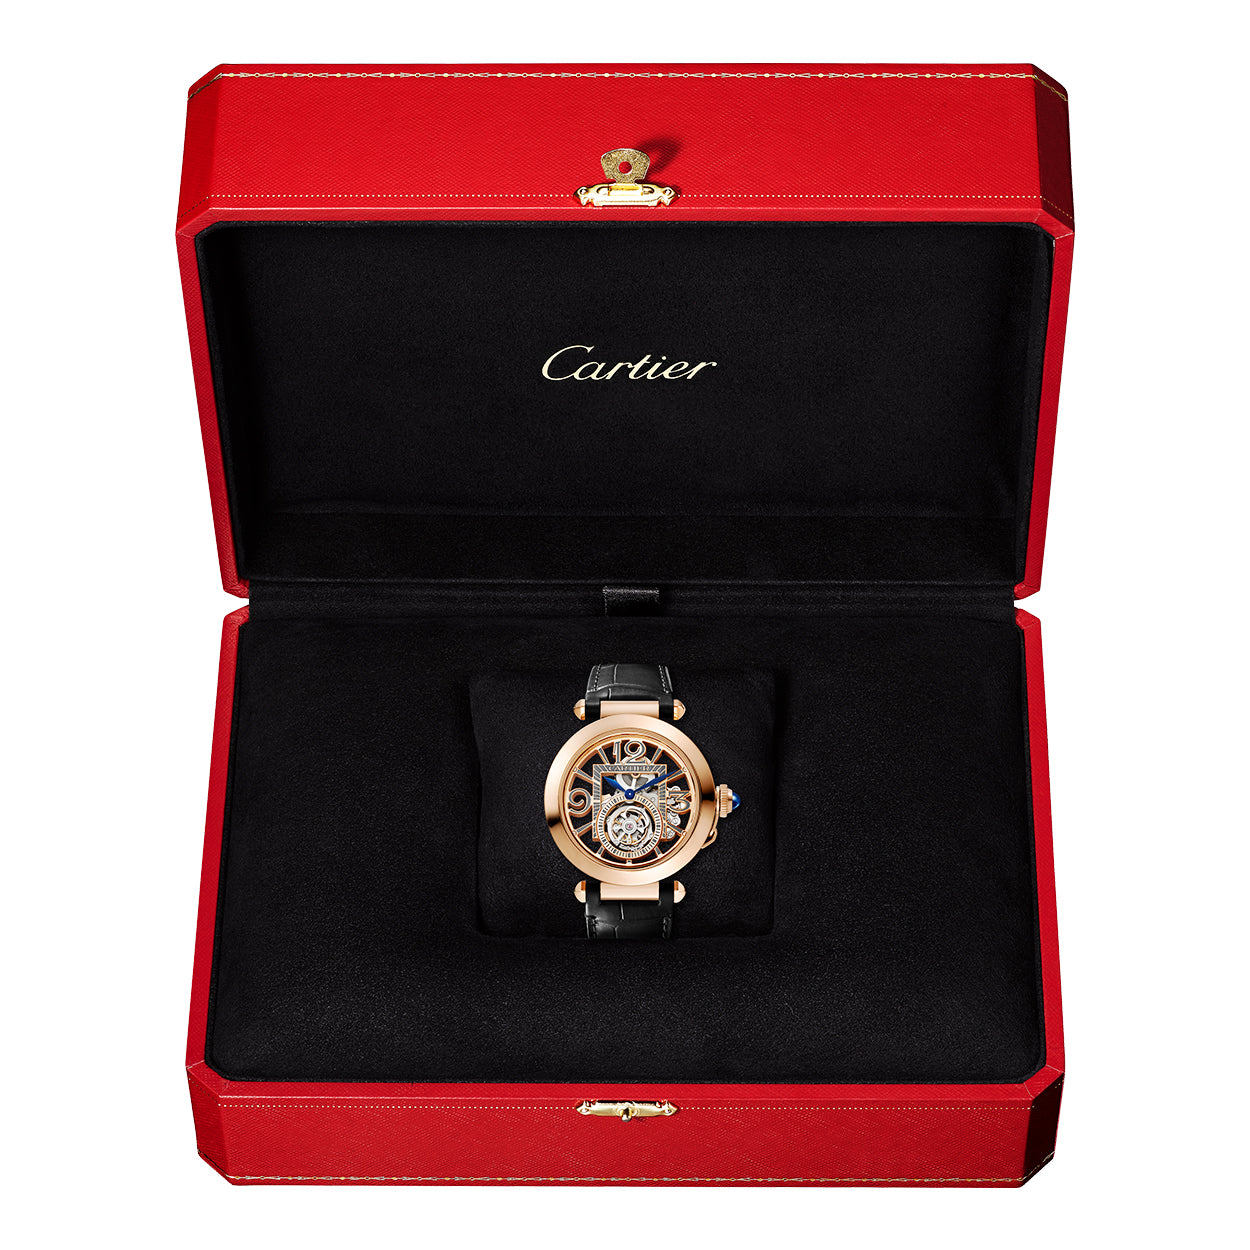 Pasha de Cartier Skeleton Tourbillon 41mm 18ct Rose Gold Watch